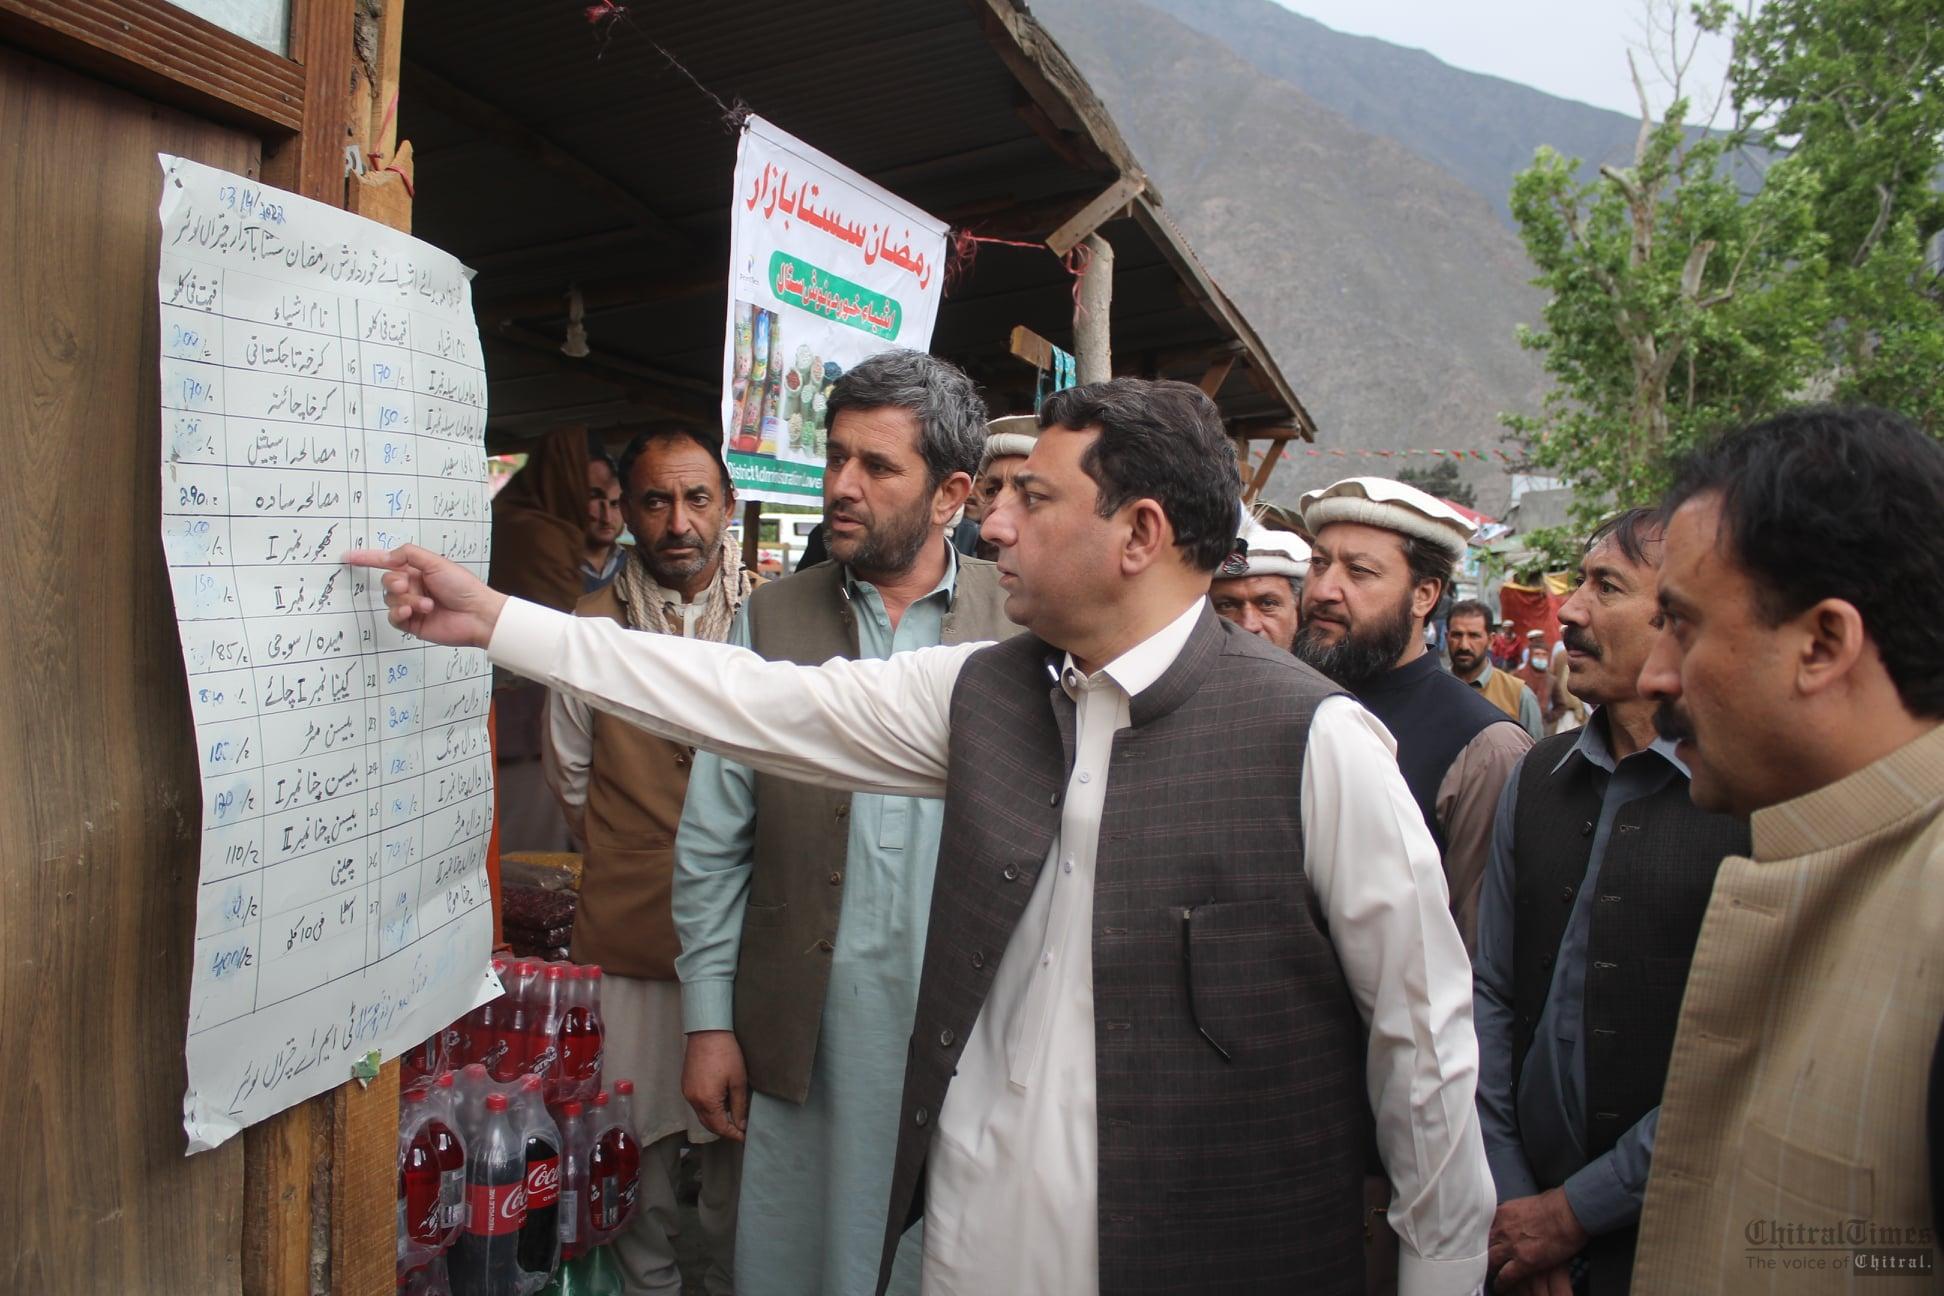 chitraltimes secretay population visit chitral sasta bazar usc 9